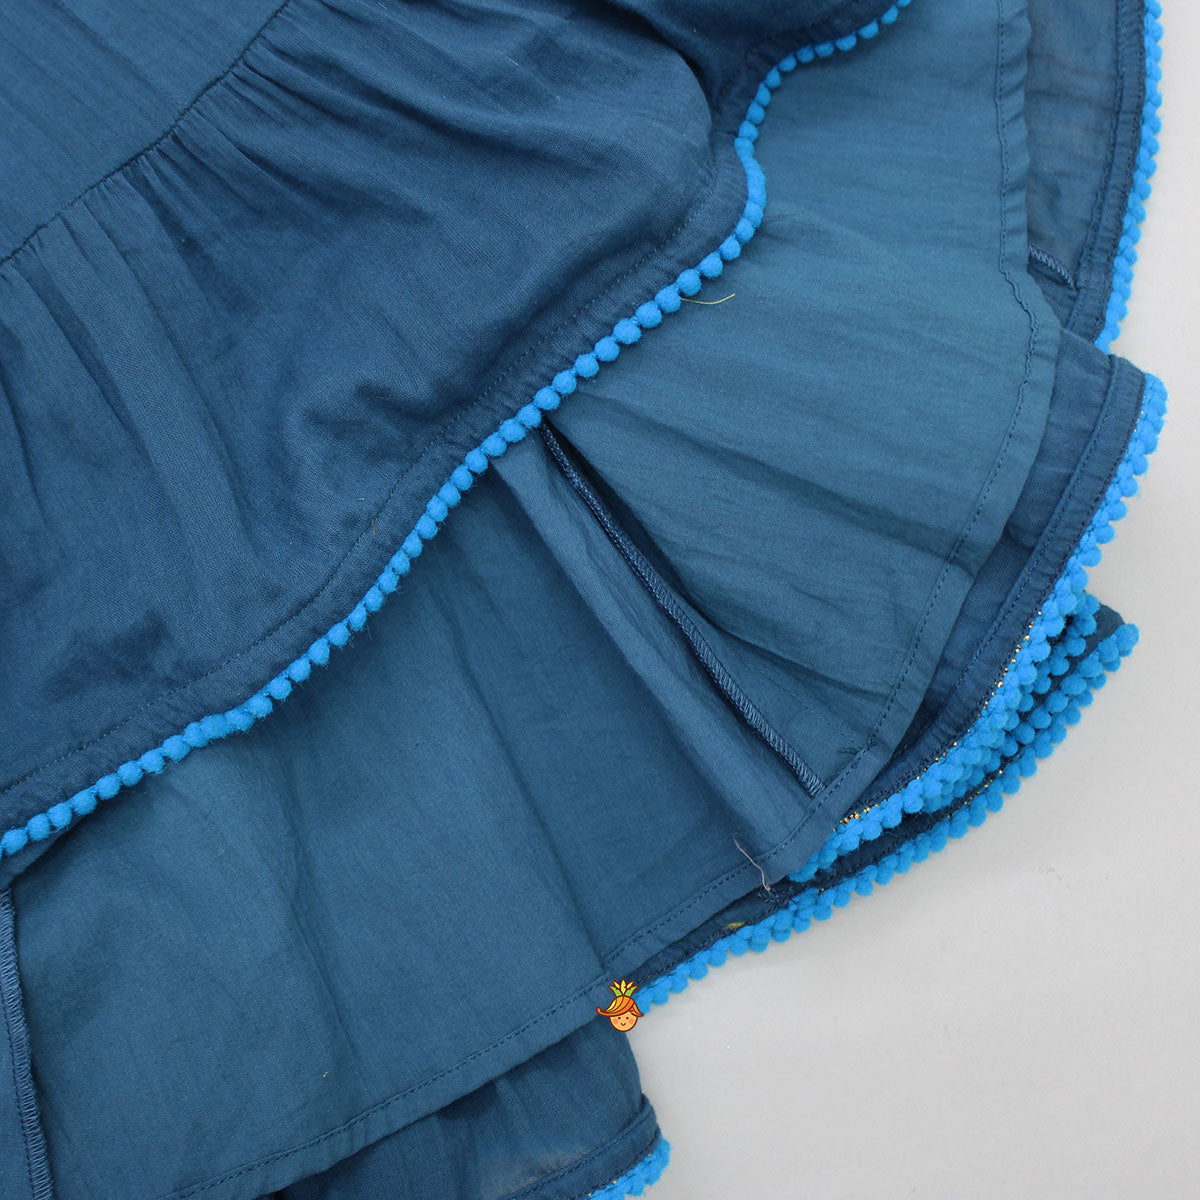 Halter Neck Pom Pom Lace Detailed Tiered Dress